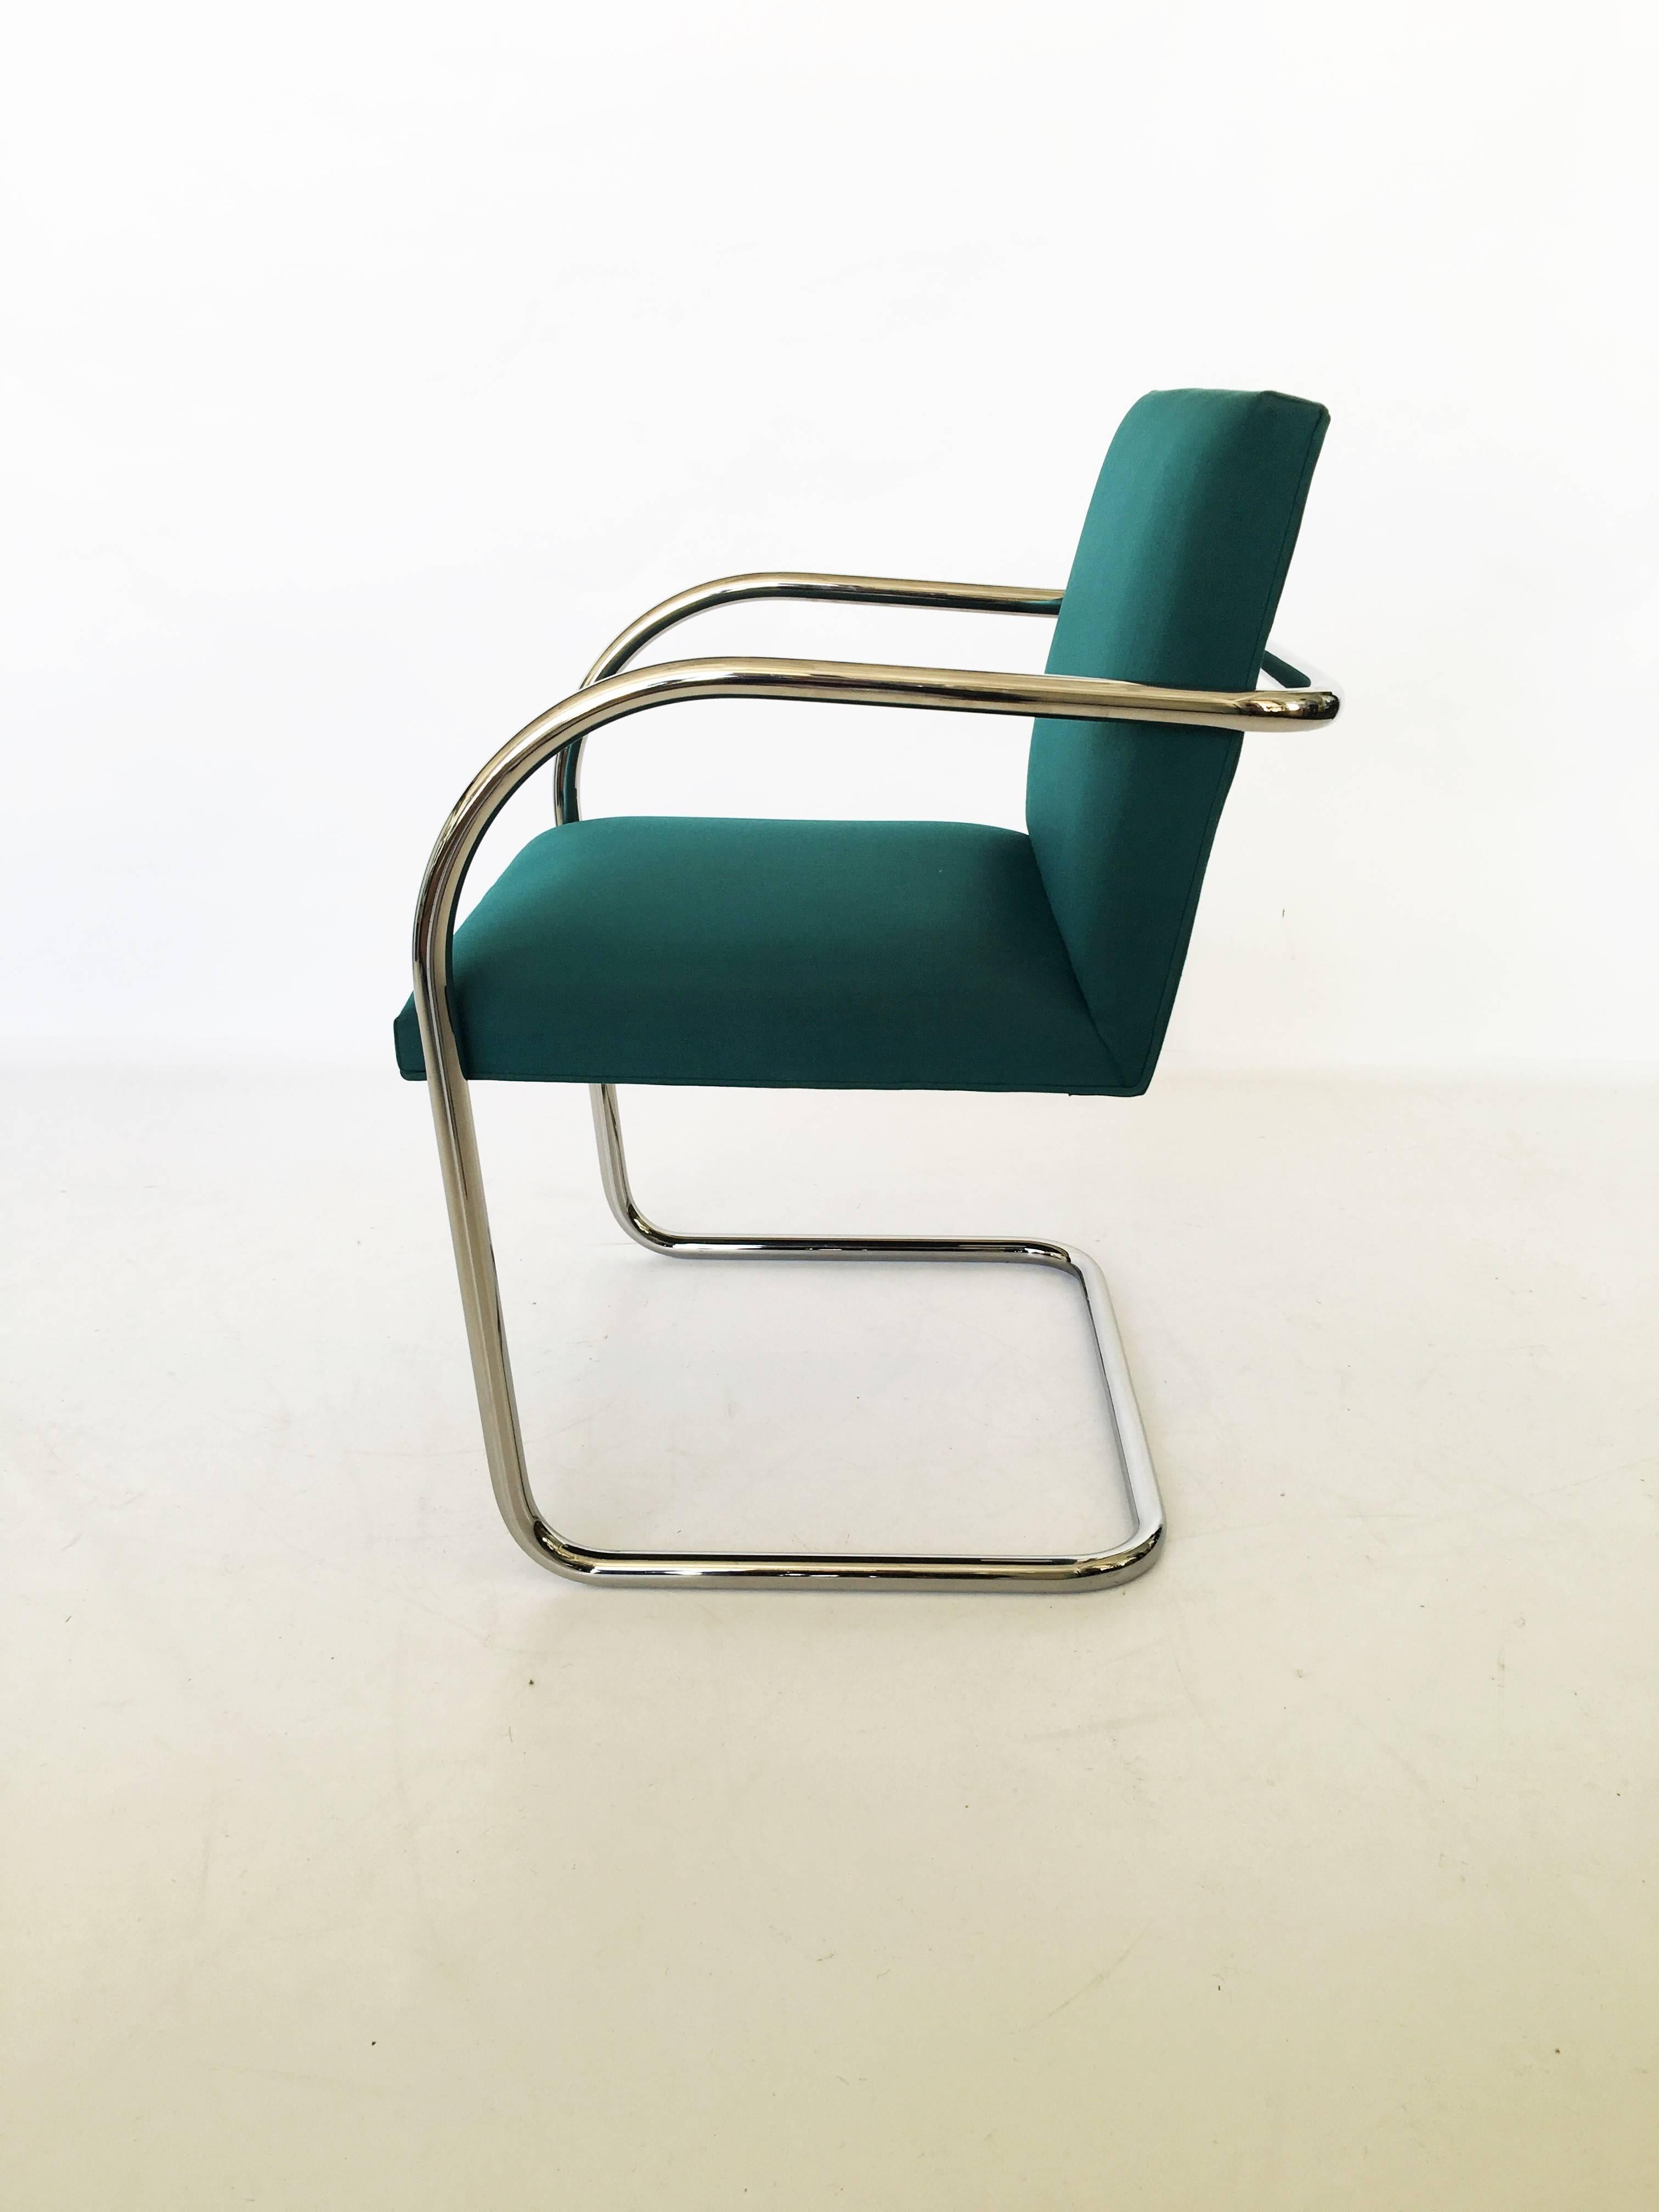 American Set of Ten Mies van der Rohe Tubular Brno Chairs by Knoll